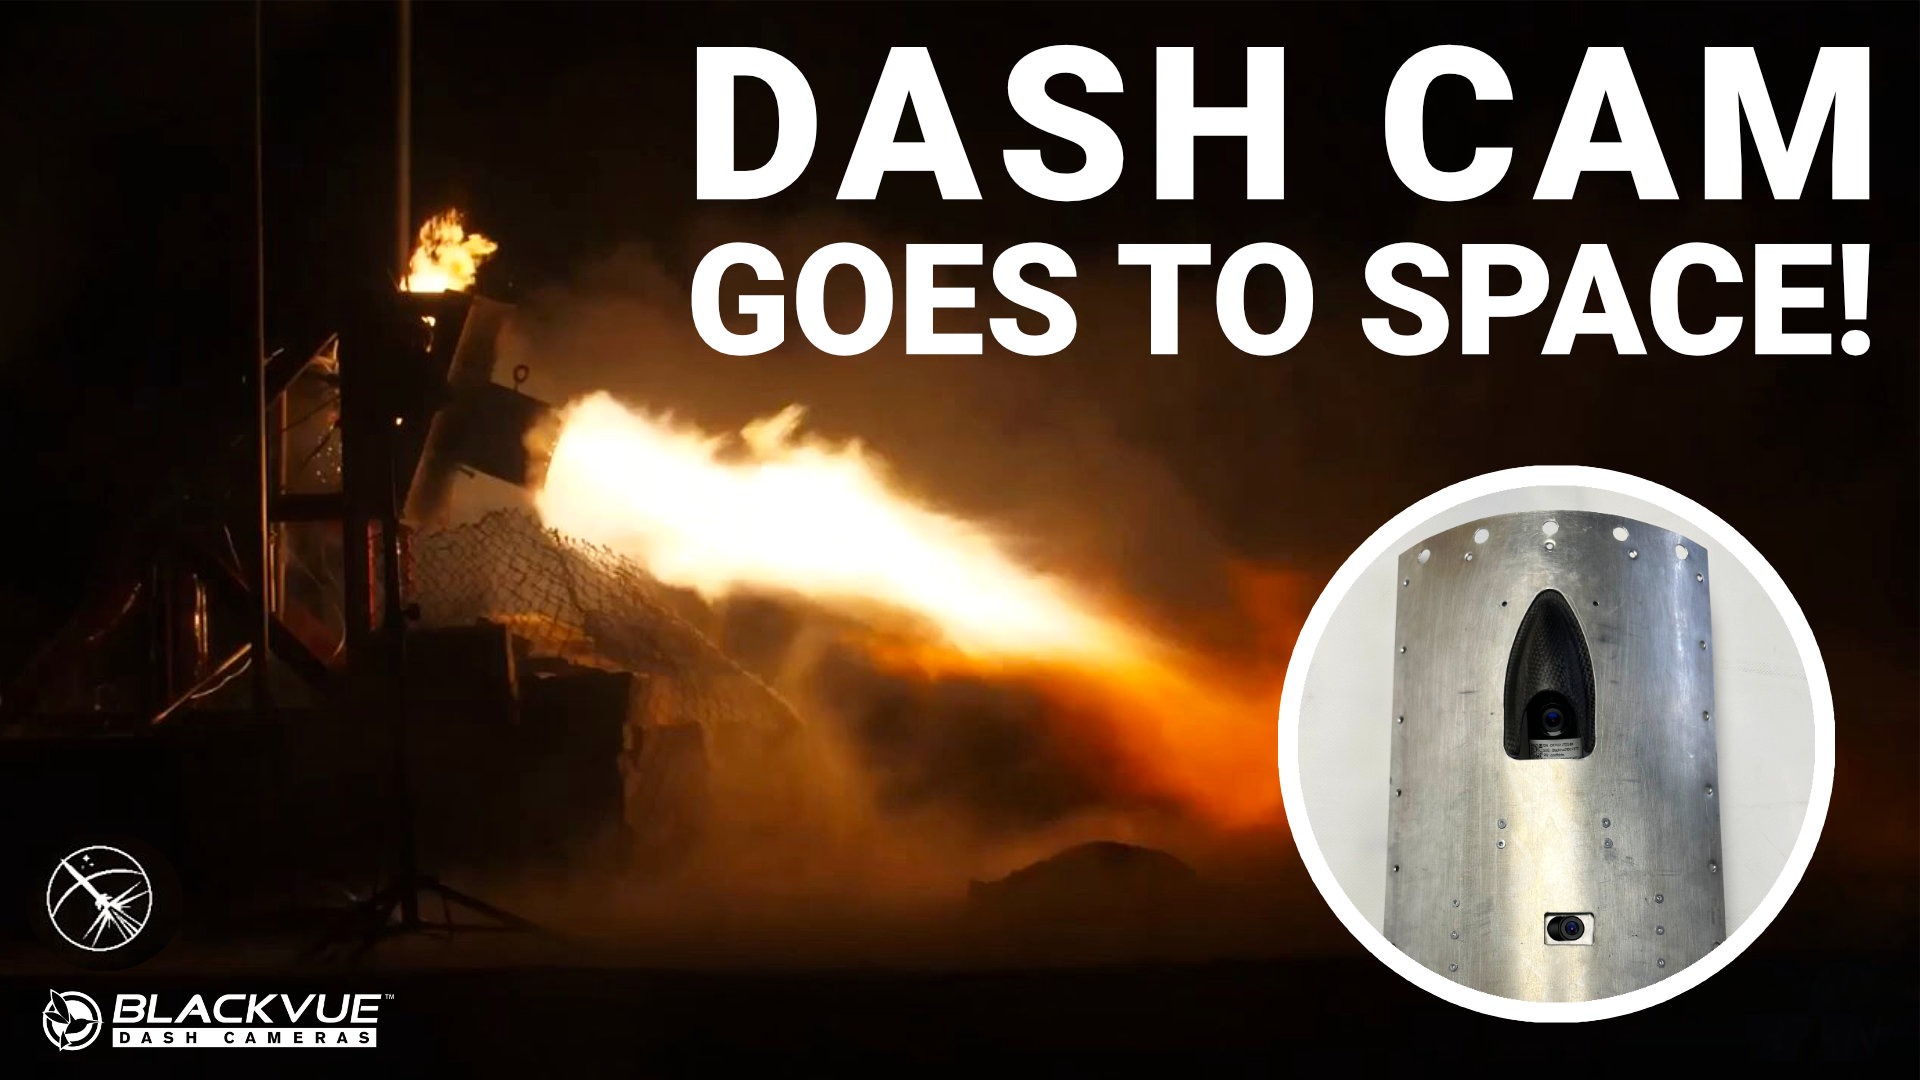 BlackVue Dash Cams Go To Space